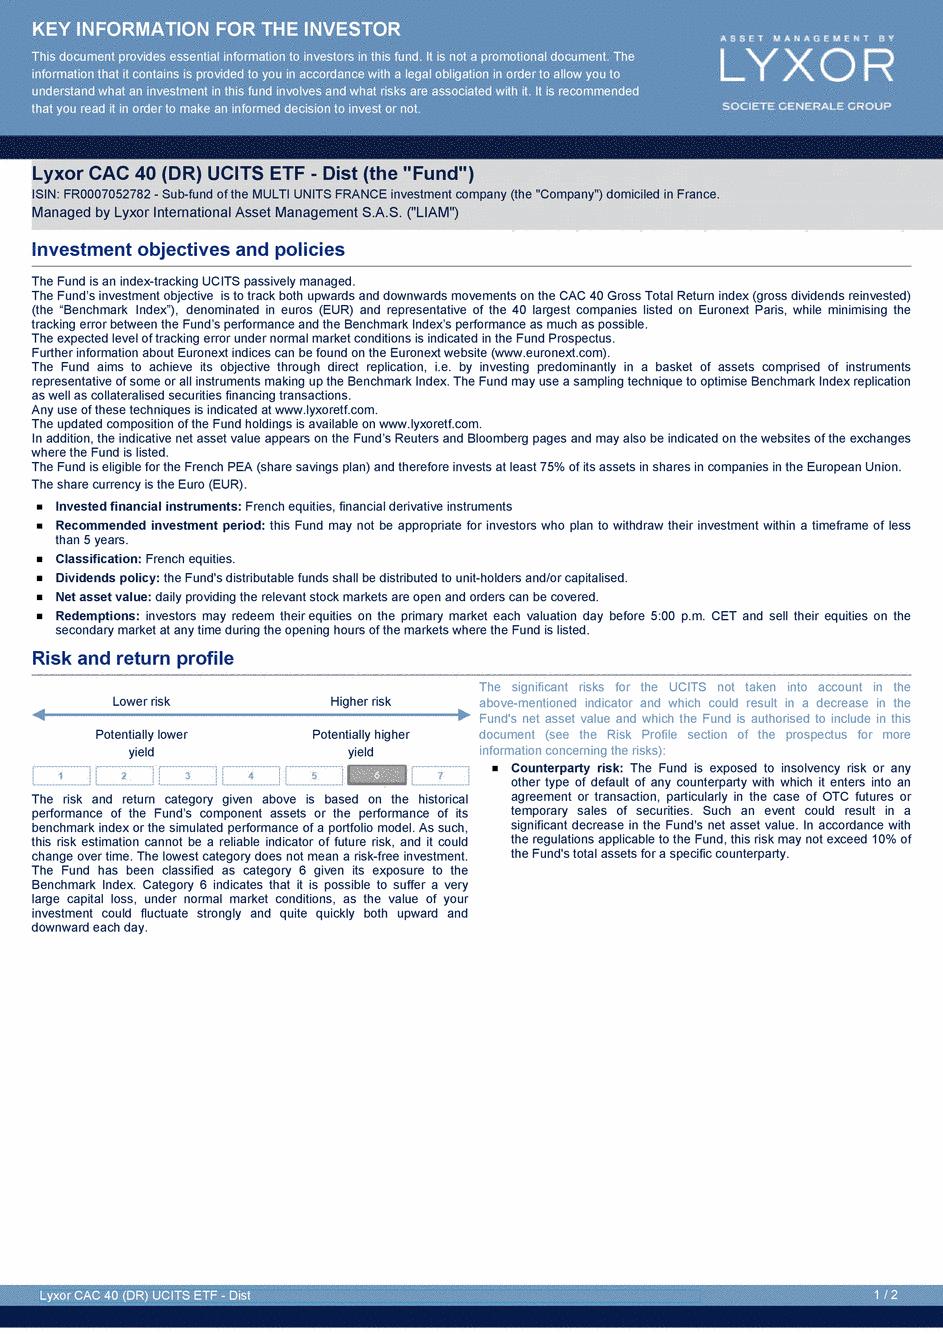 DICI Lyxor CAC 40 (DR) UCITS ETF - Dist - 19/02/2021 - Anglais